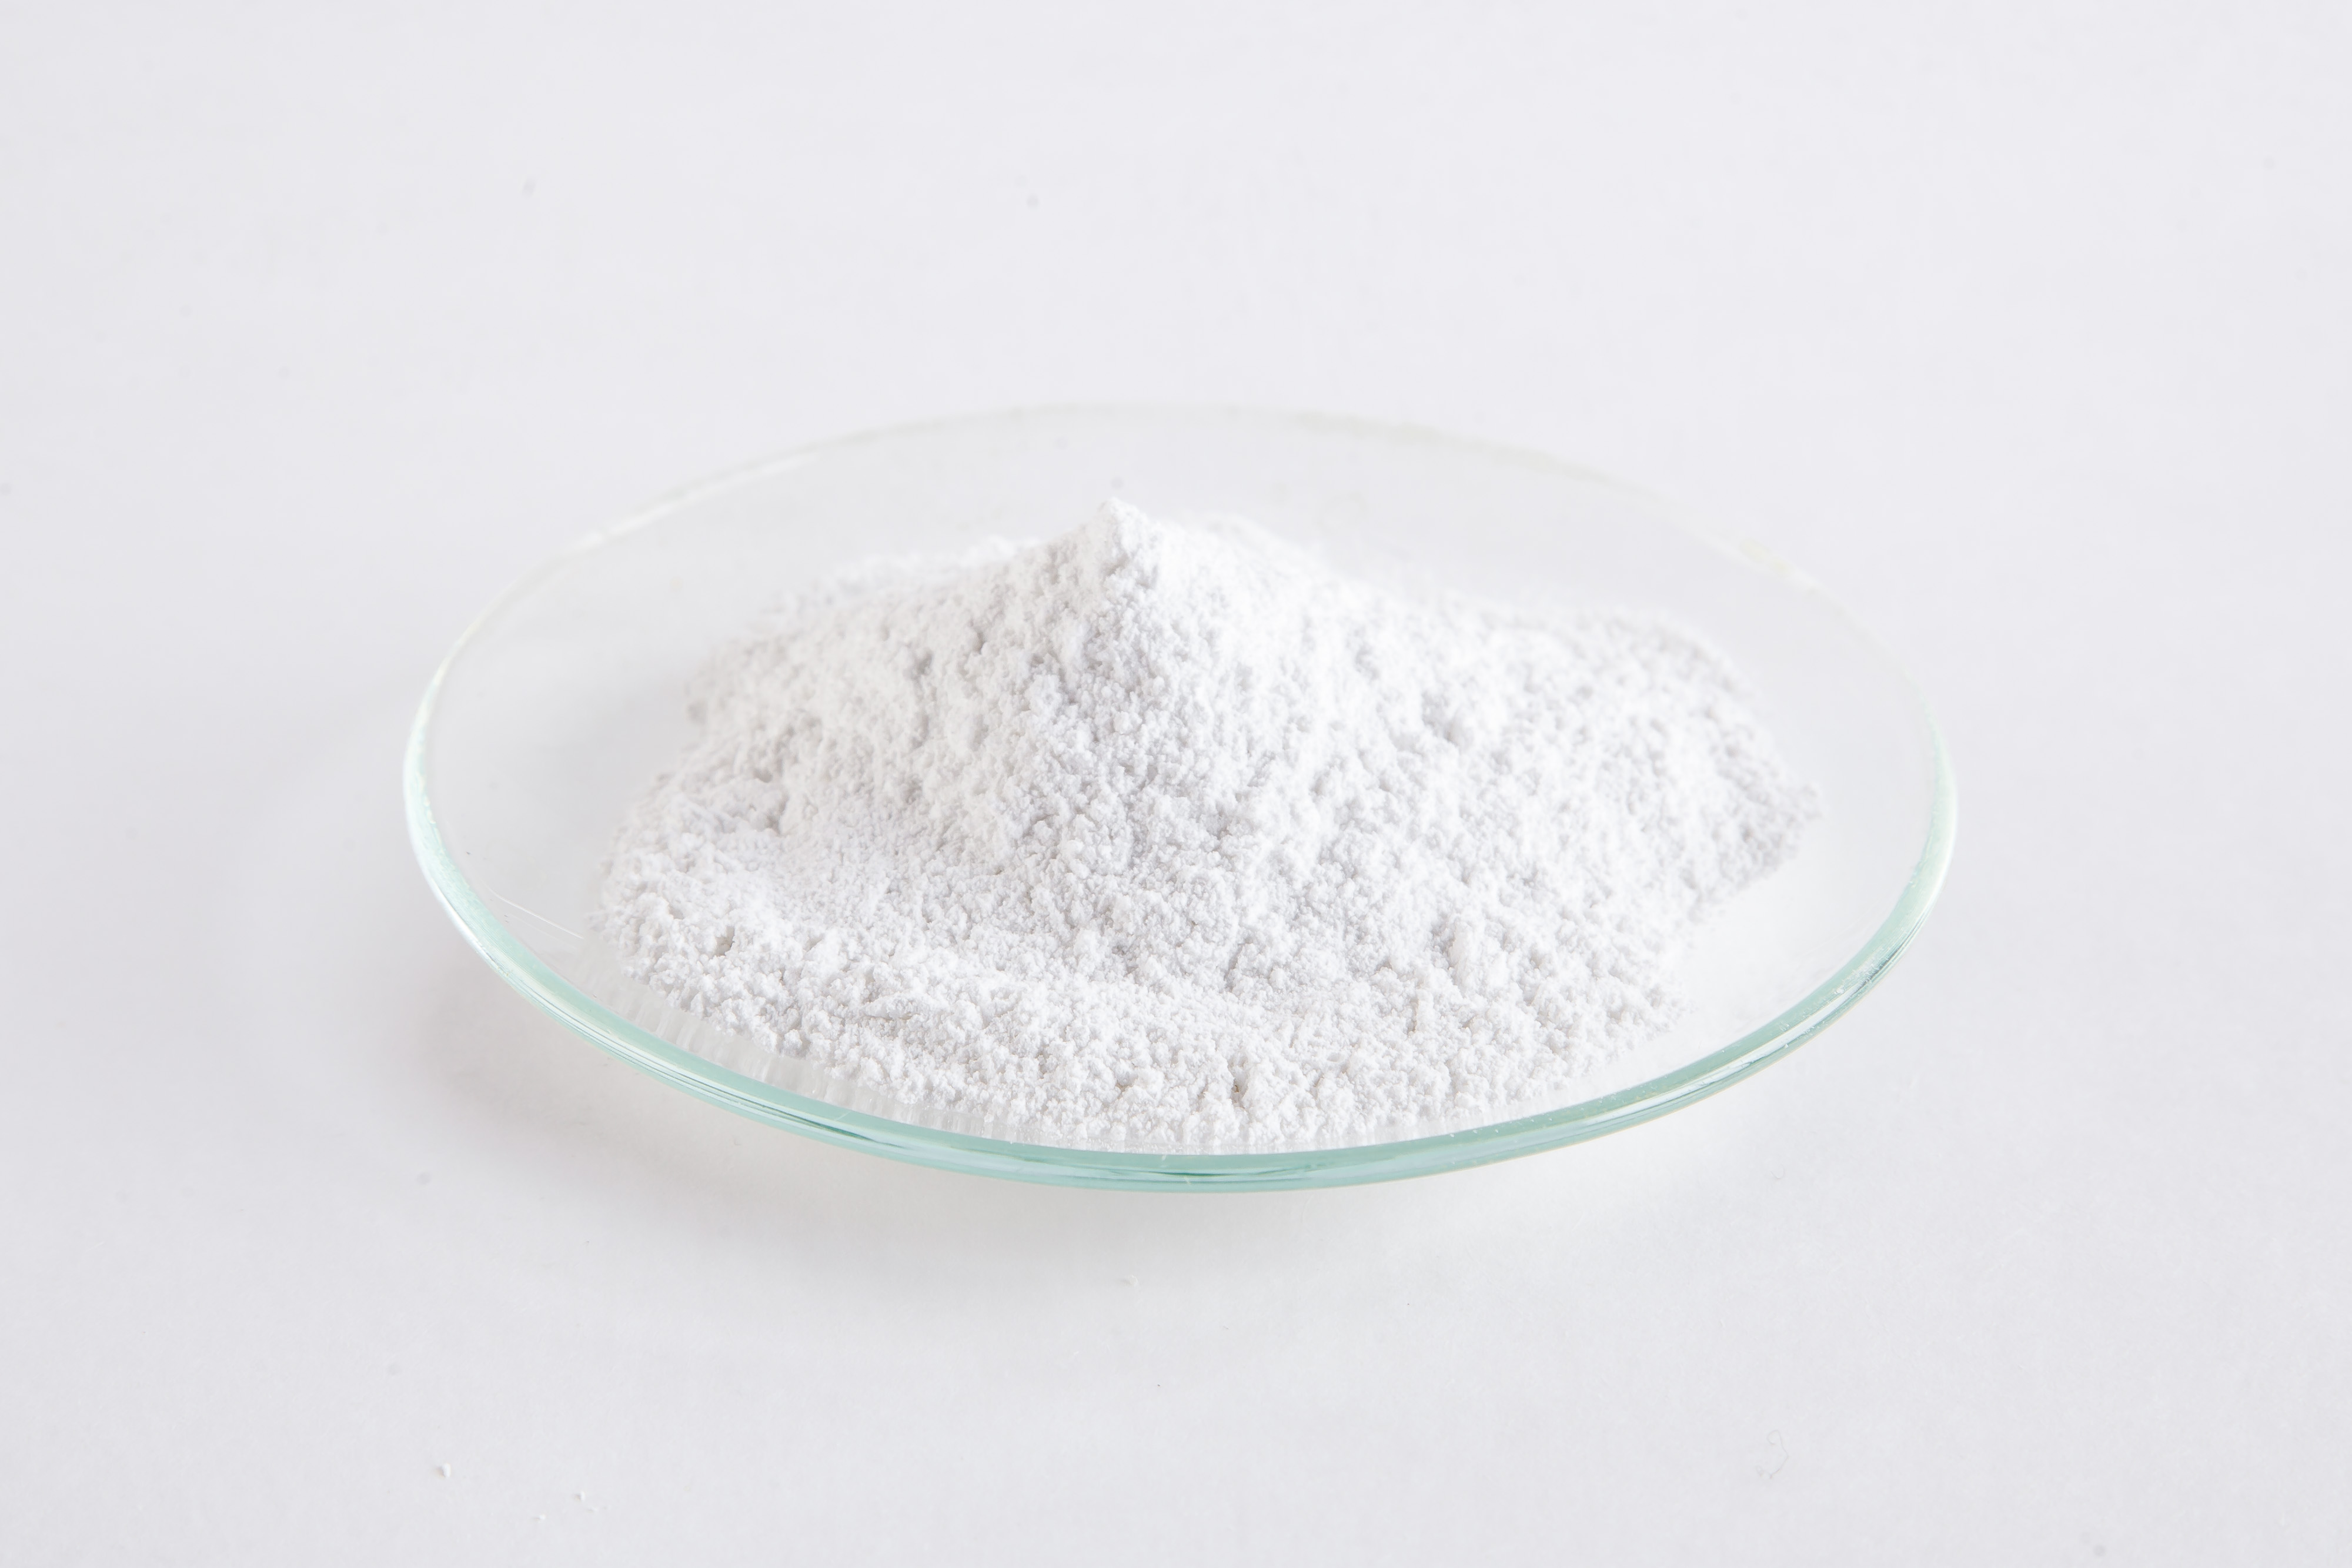 Boron nitride powders